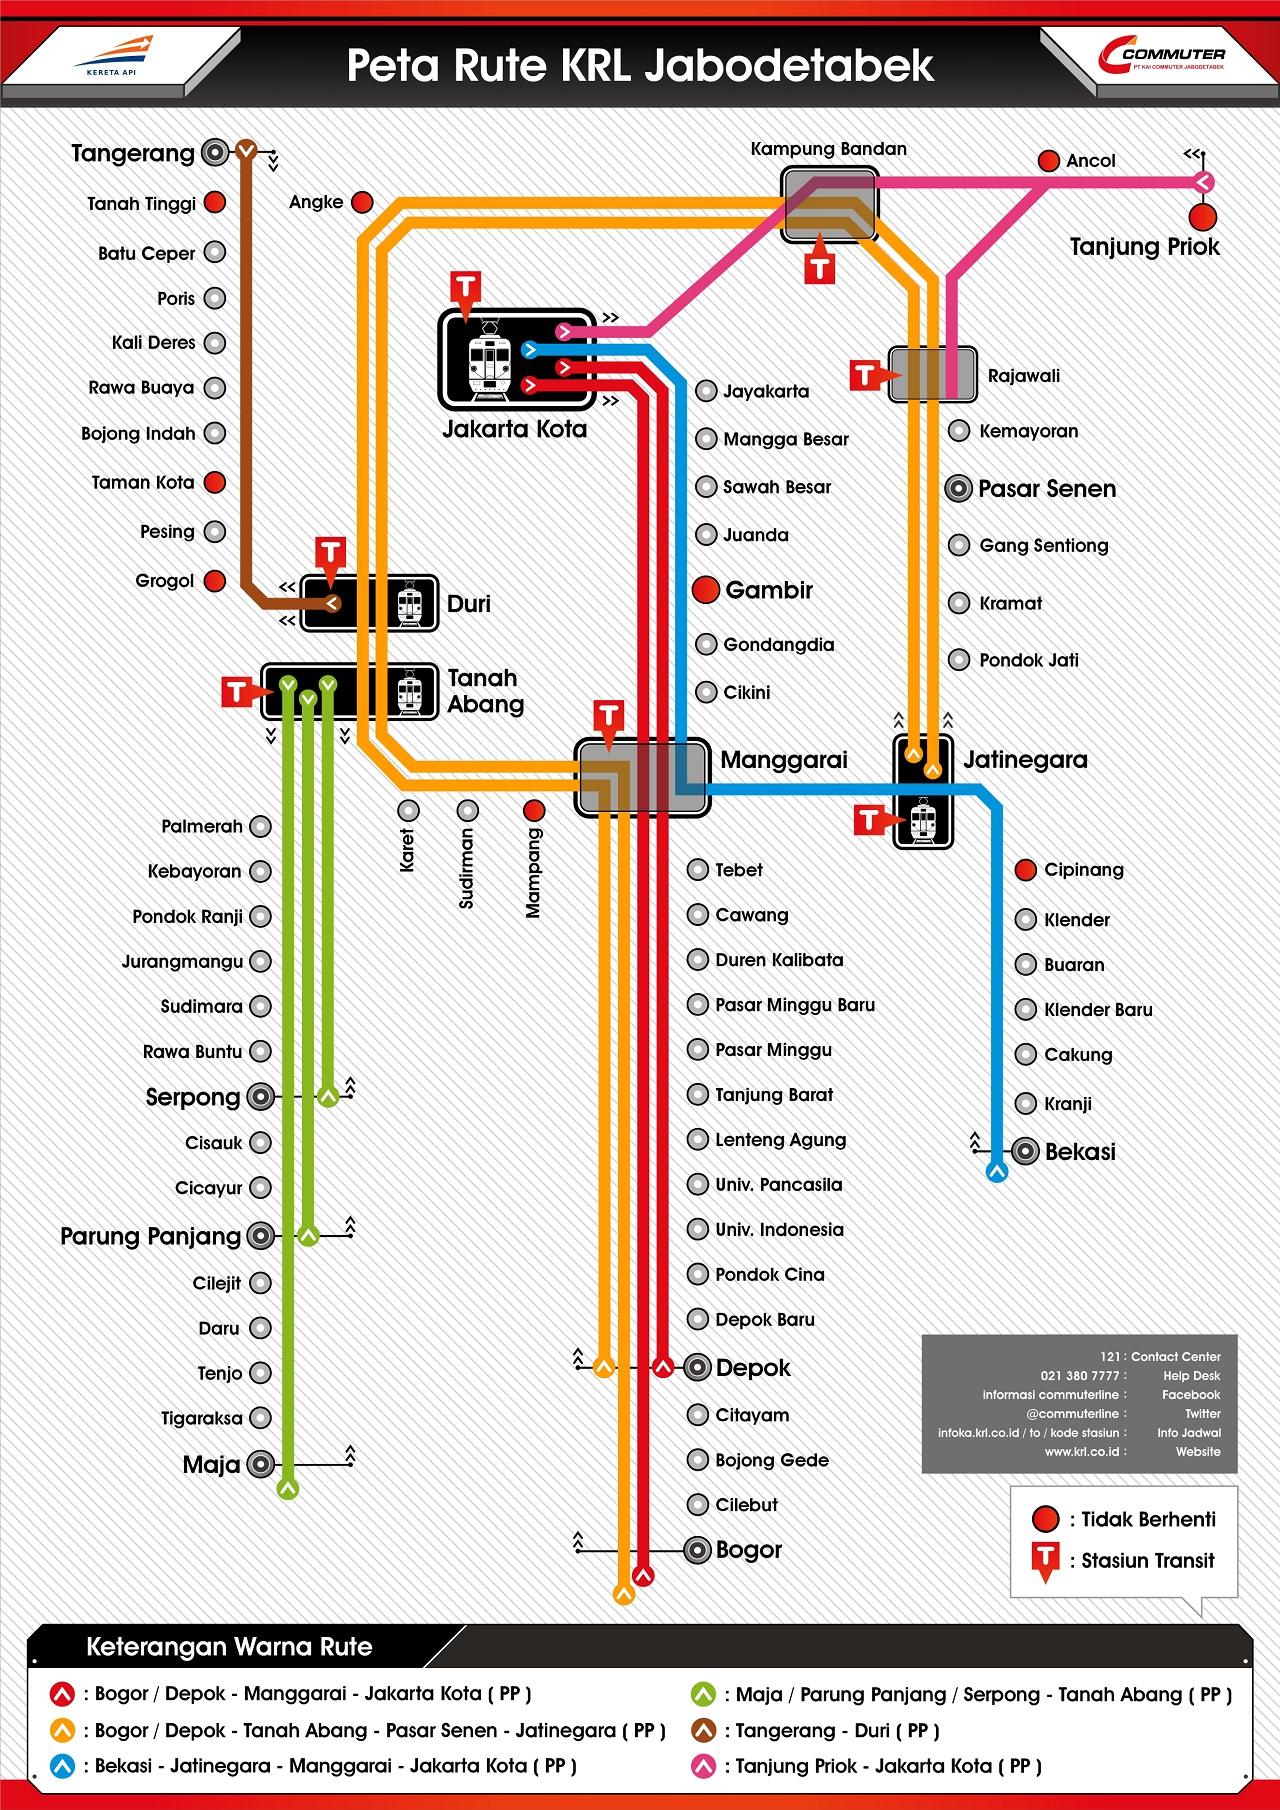 Info Commuter Line on Twitter: "@anggaKurchaciiX maaf KRL 